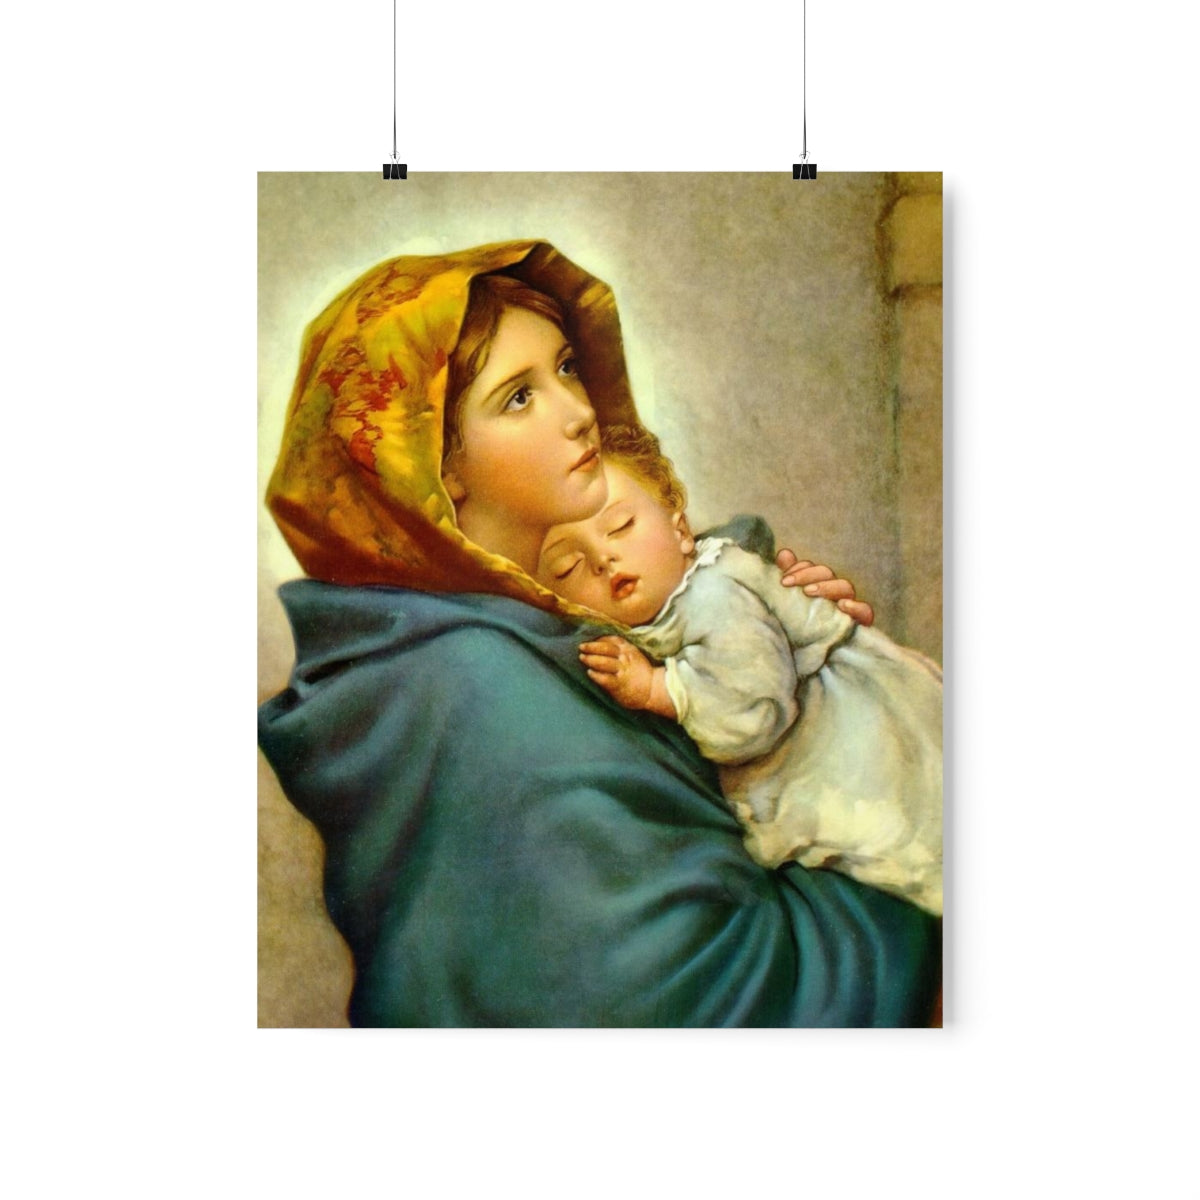 Virgin Mary And Child By Italian Painter Roberto Ferruzzi Print Poster